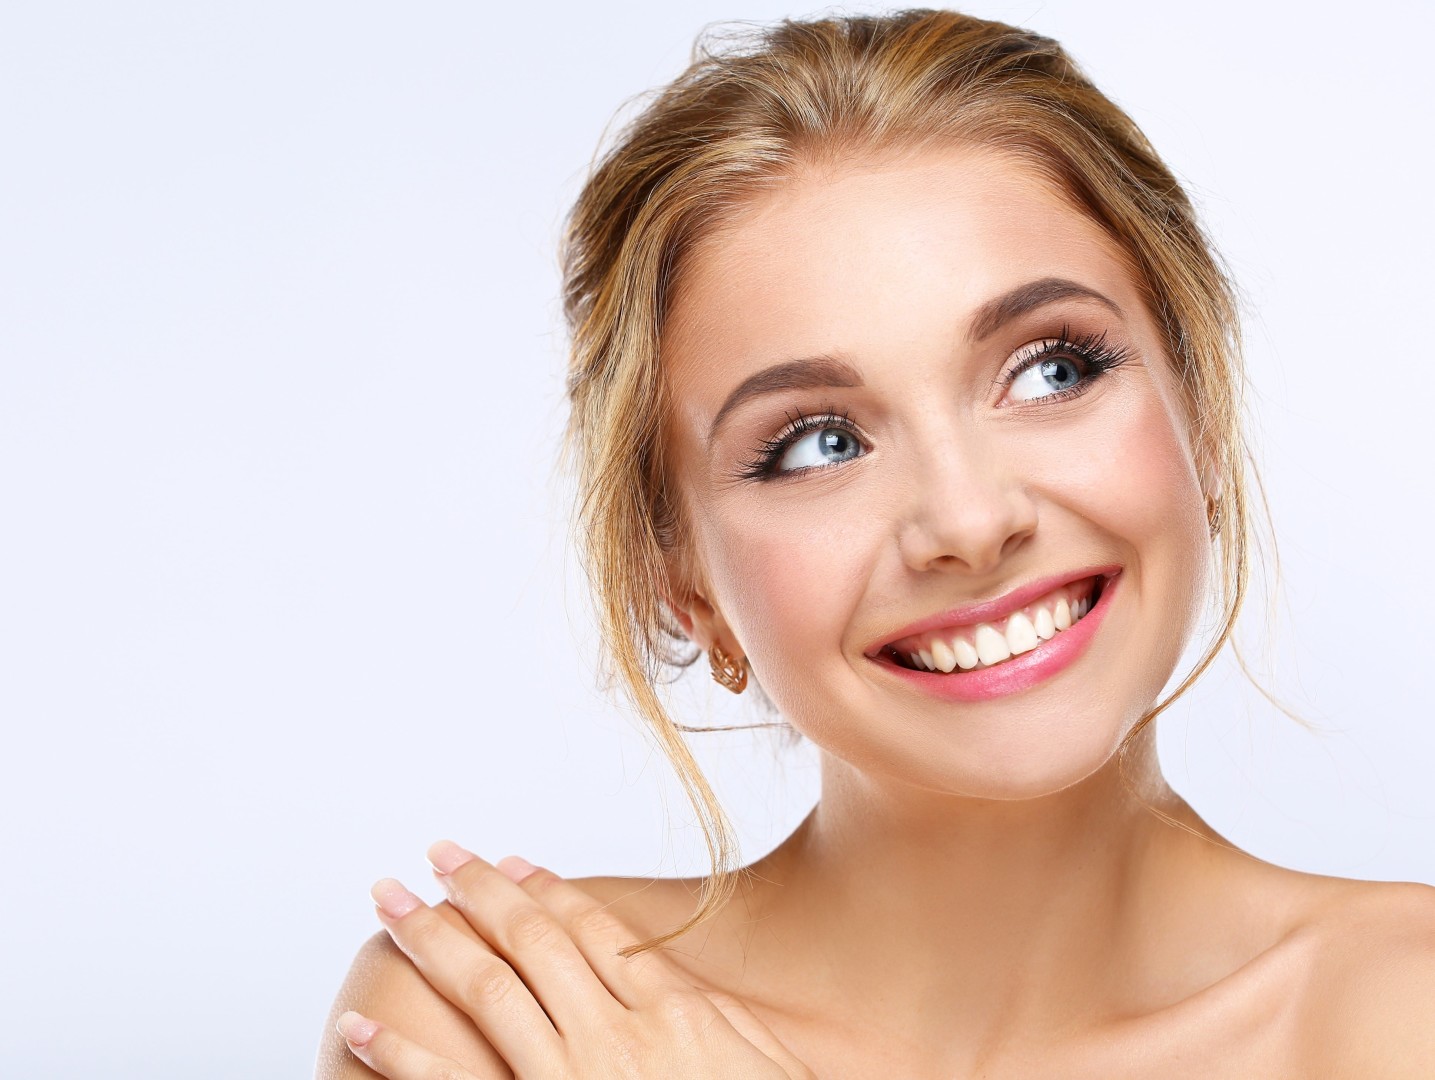 Piercing - Orthodontie et vous